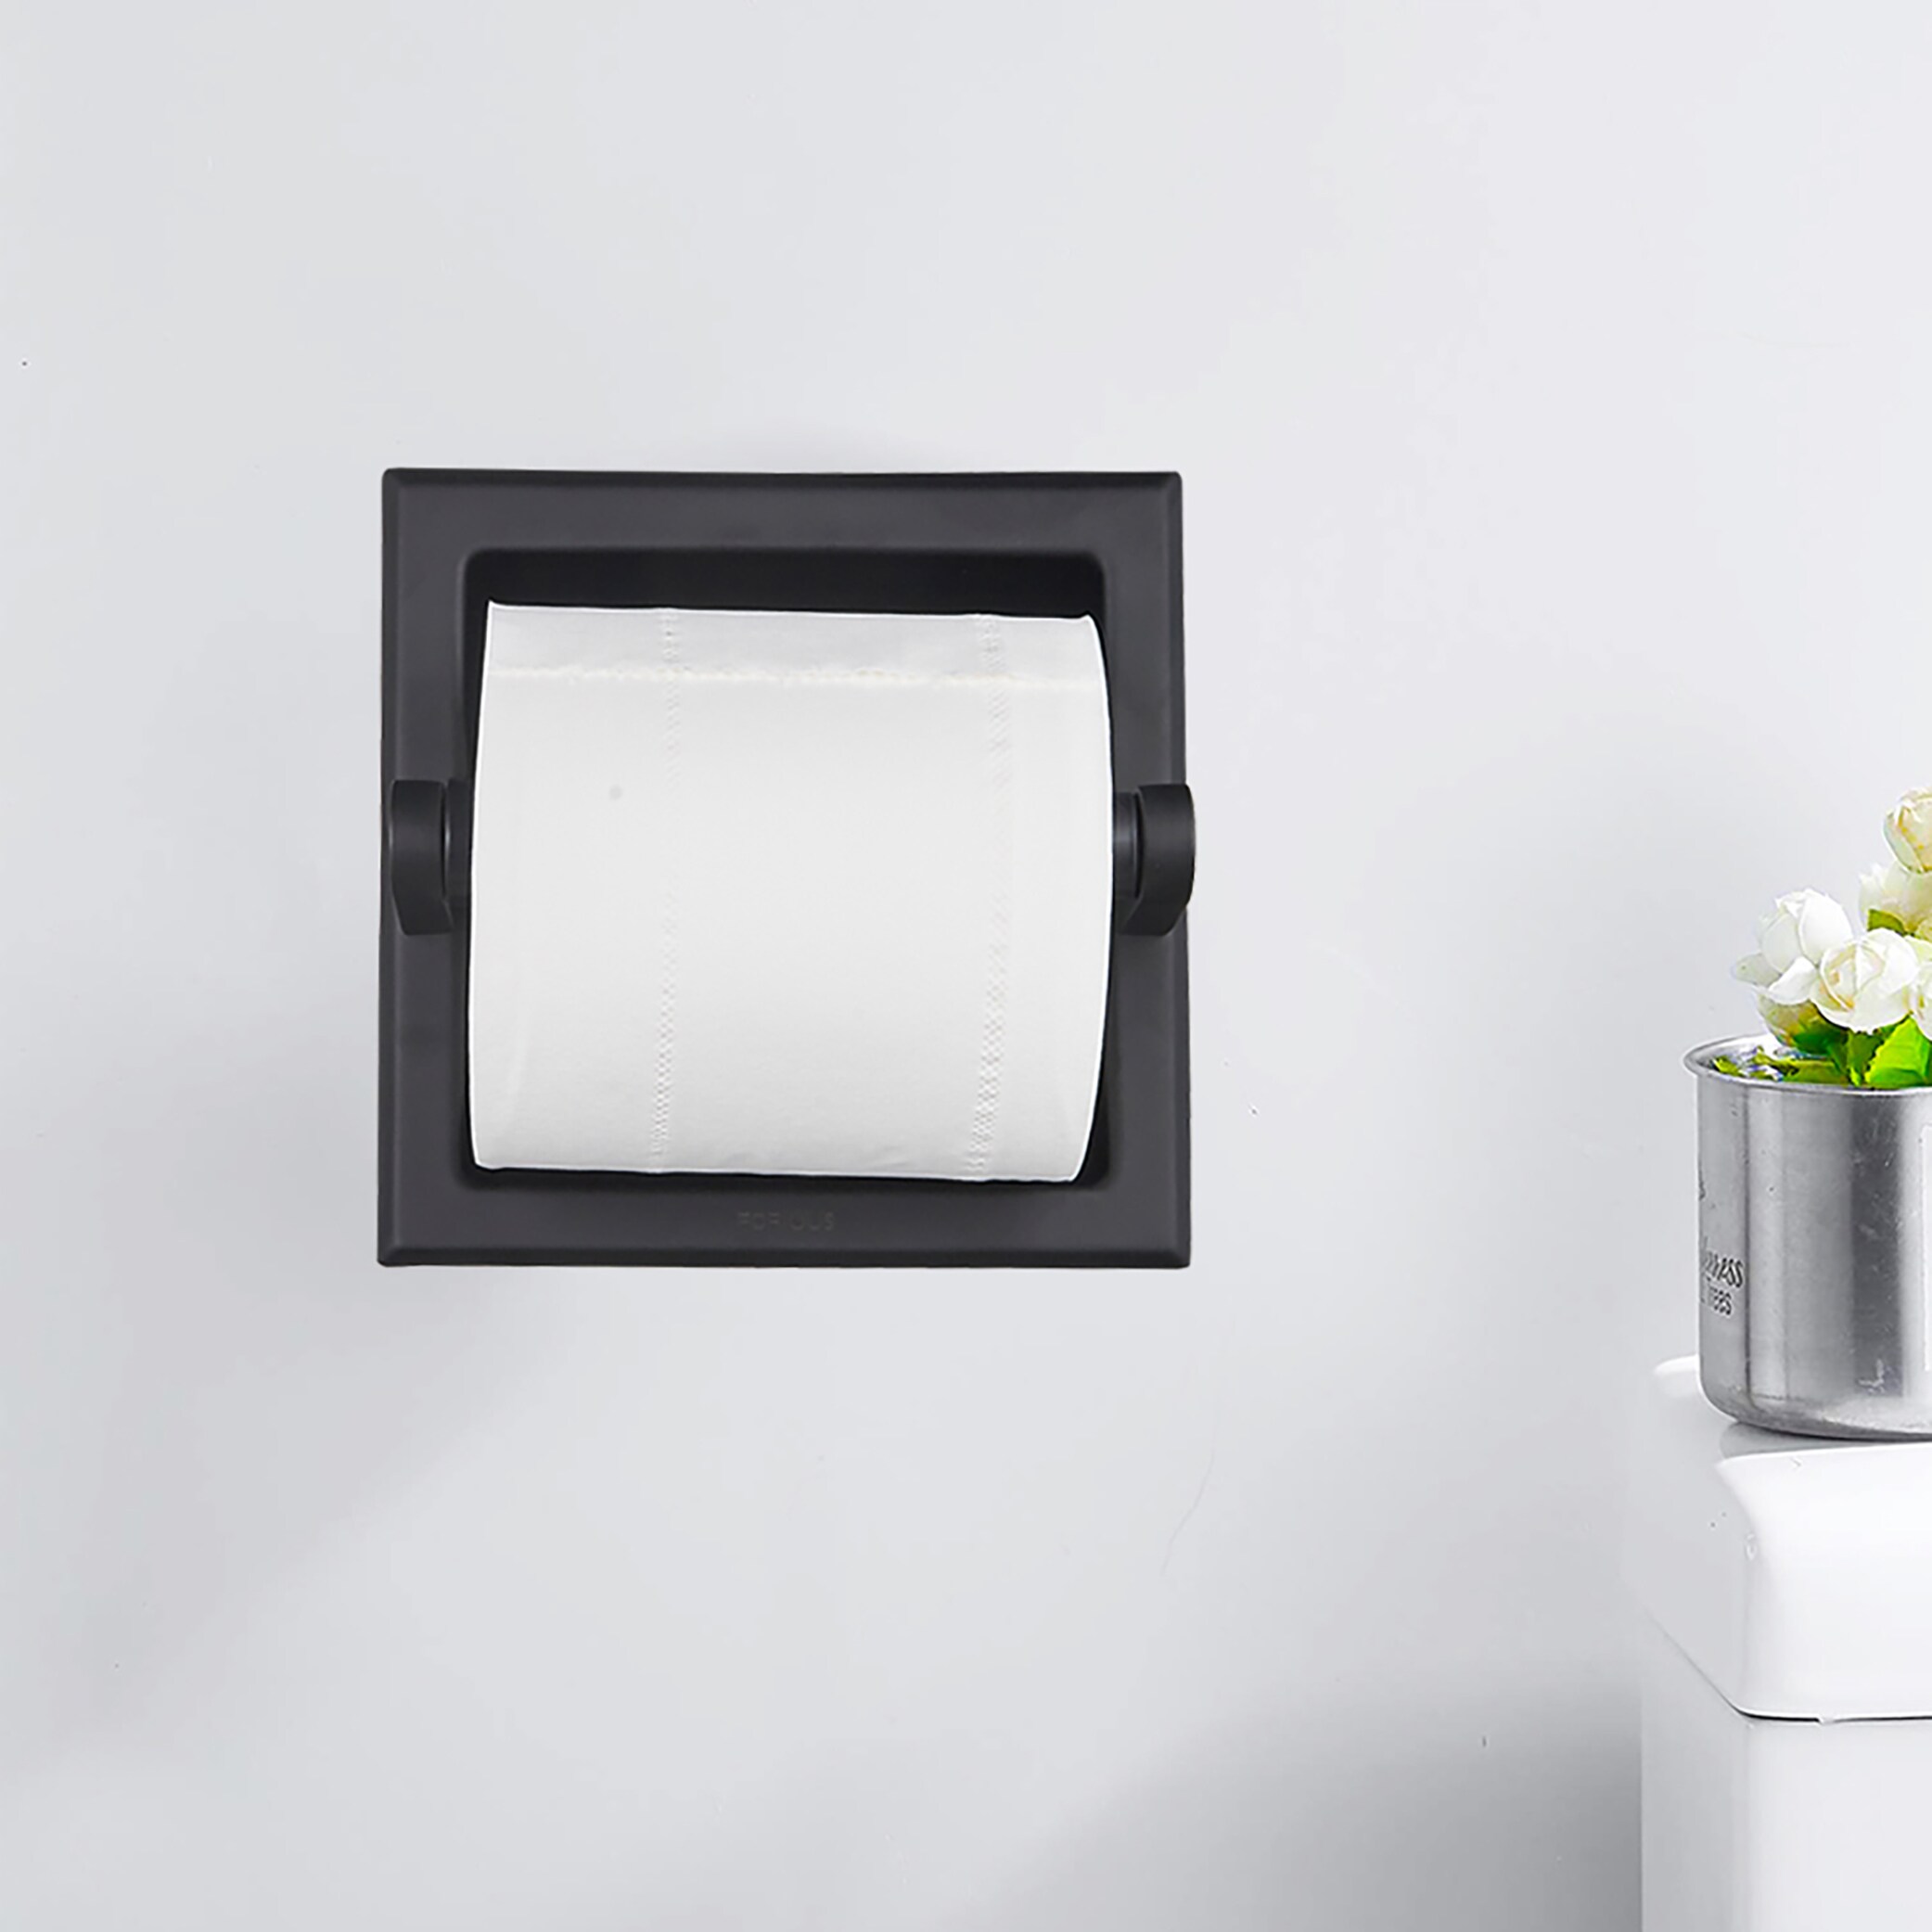 Susswiff Toilet Paper Holder Stand with Top Storage Shelf, Floor Free  Standing Toilet Paper Dispenser Storages 4 Reserve Rolls, Black